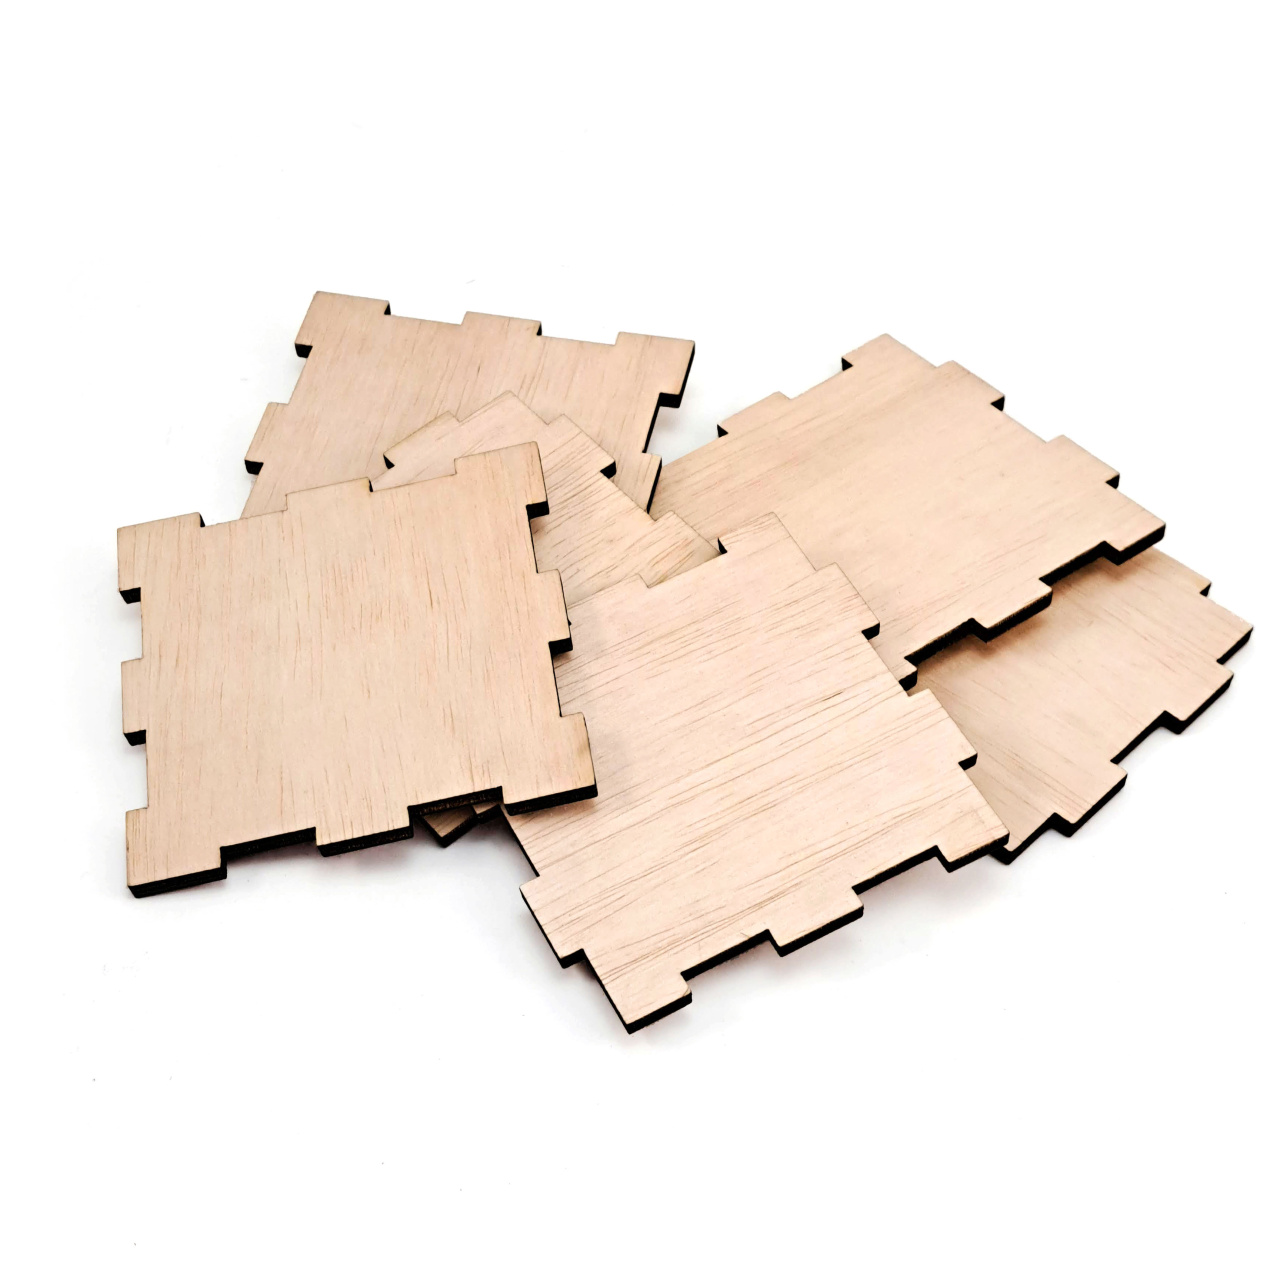 Cubuleț placaj lemn, 15×15×15 cm :: 15 cm